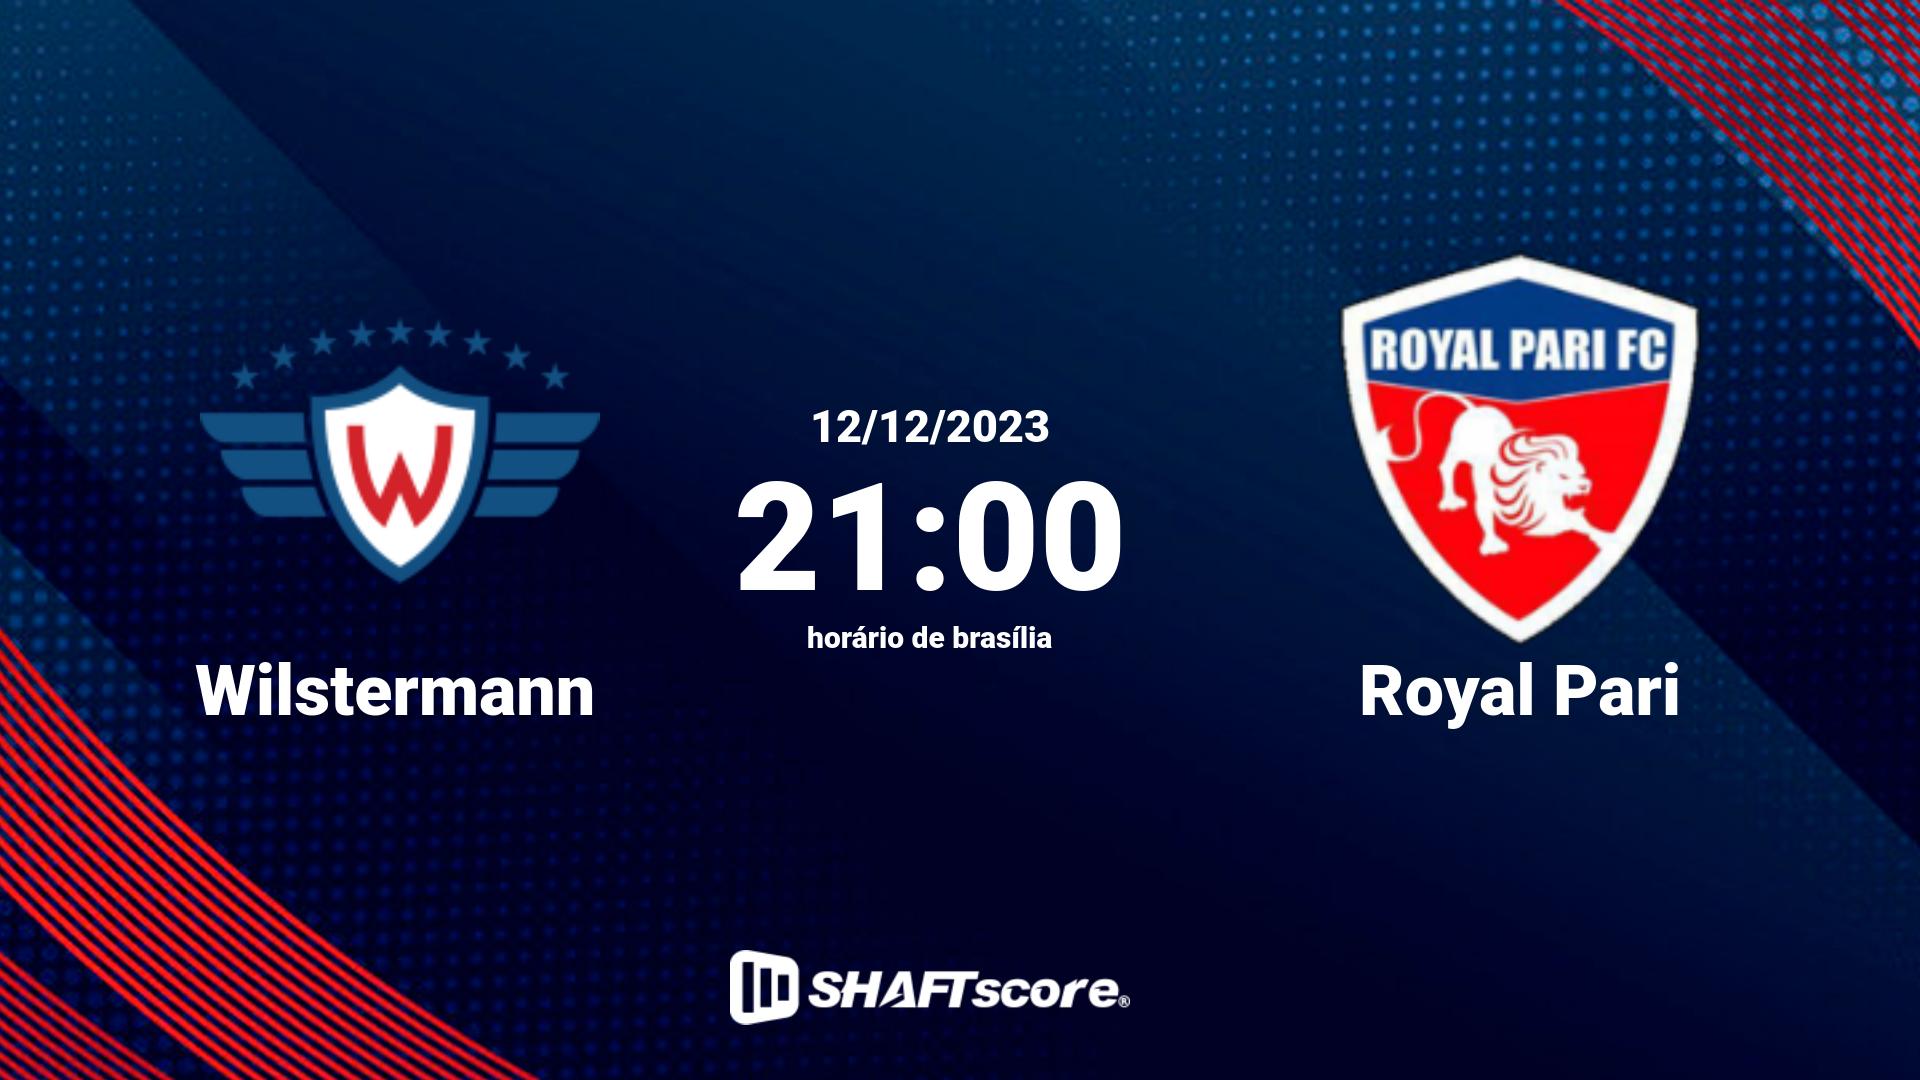 Estatísticas do jogo Wilstermann vs Royal Pari 12.12 21:00